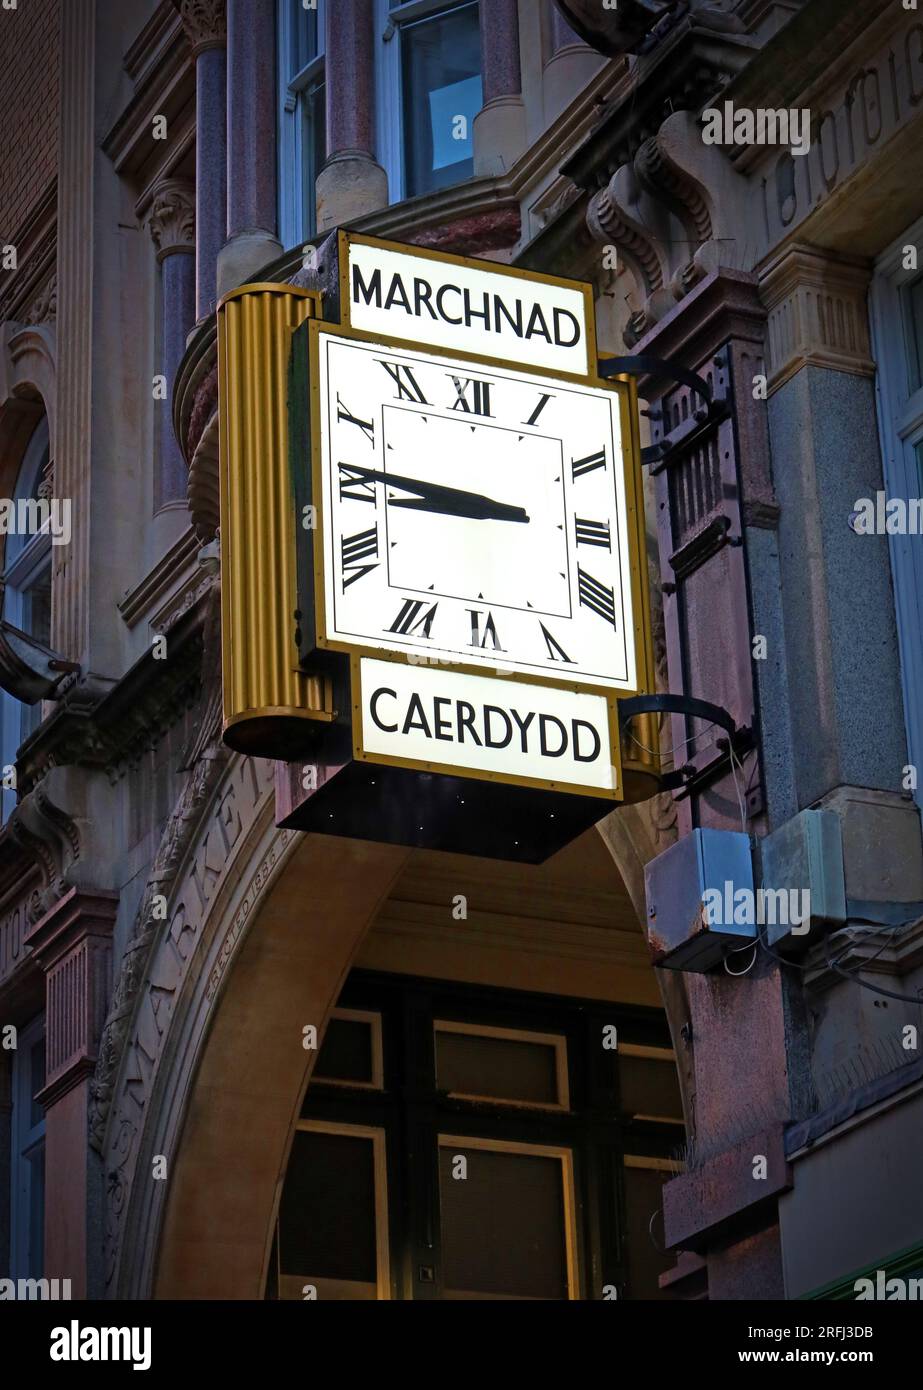 Cardiff Market Building and clock 1891 - Marchnad Caaerdydd, Castle Quarter, 49 St. Mary Street, Cardiff, pays de Galles, Royaume-Uni, CF10 1au Banque D'Images